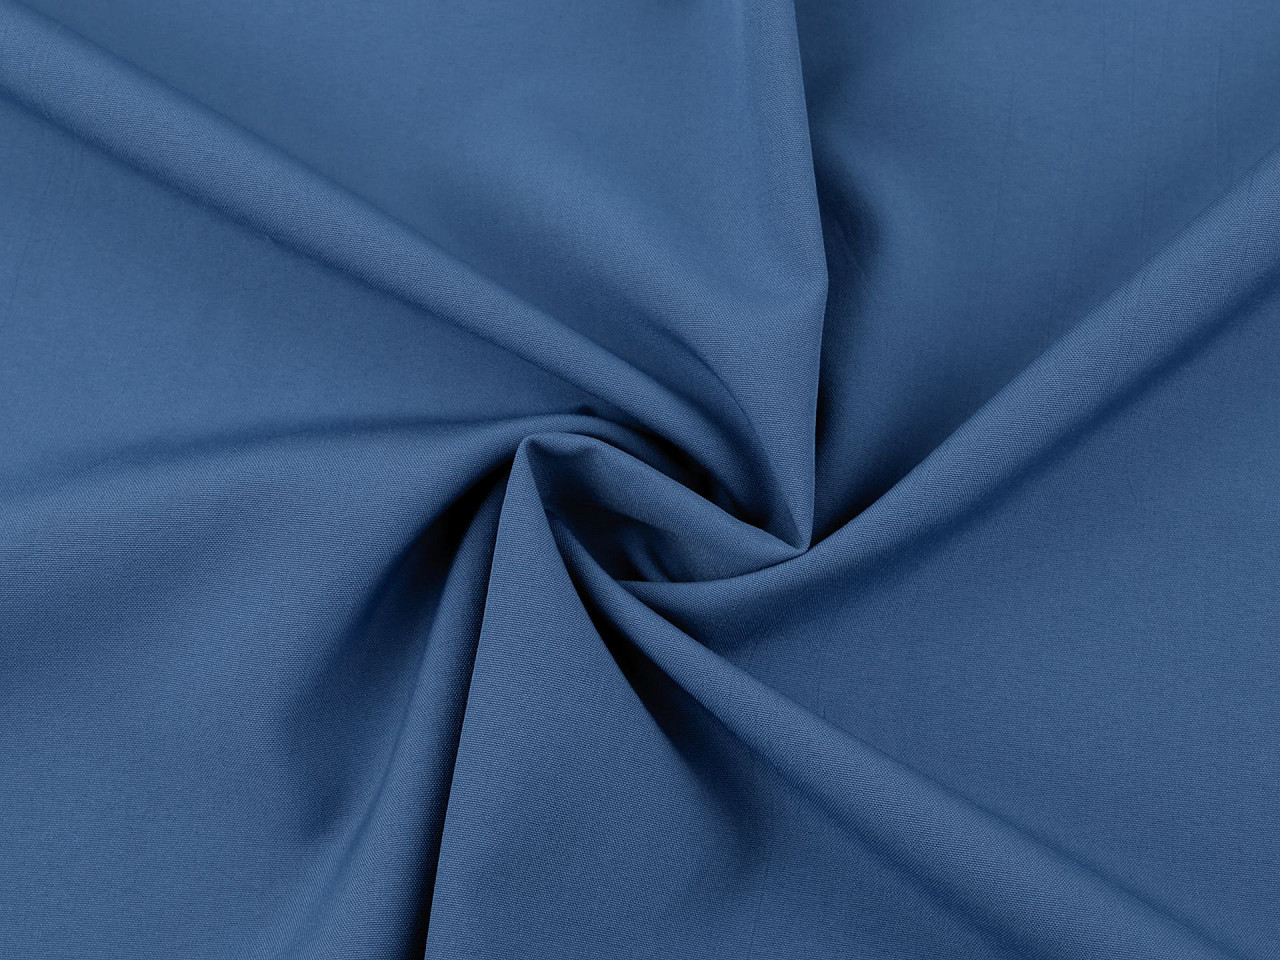 Šatovka hladká, barva 7 (036) modrá safírová